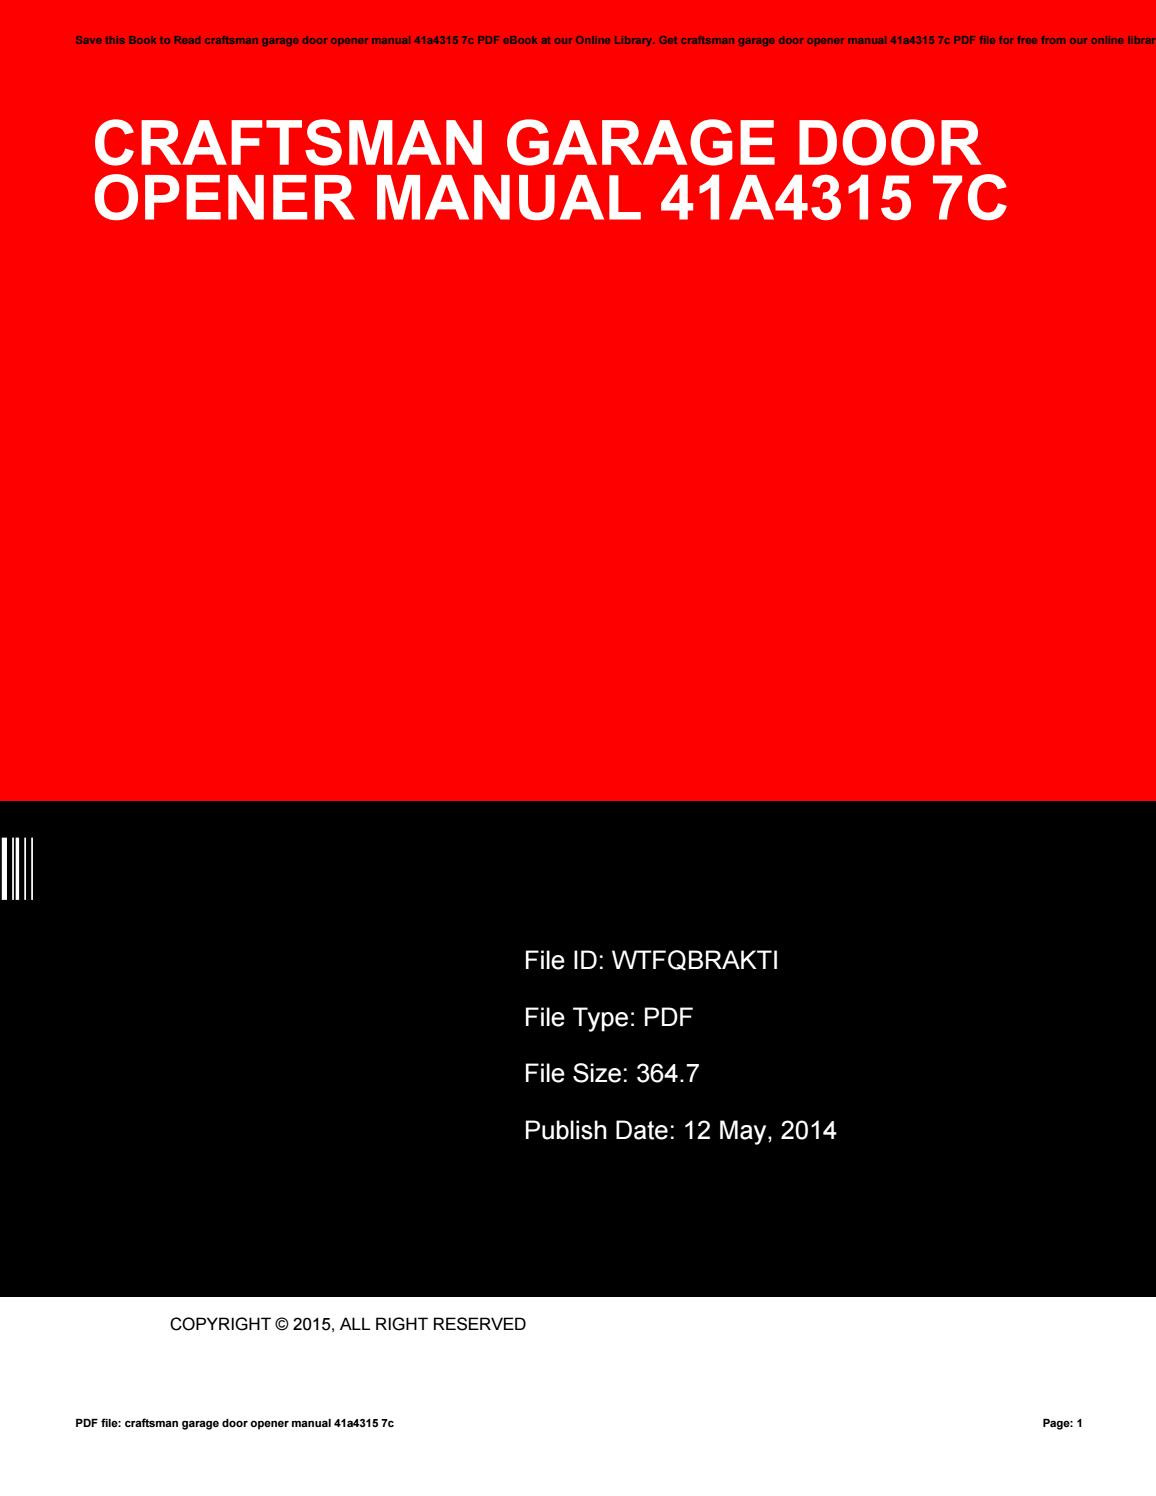 Craftsman Garage Door Opener Manual
 Craftsman garage door opener manual 41a4315 7c by